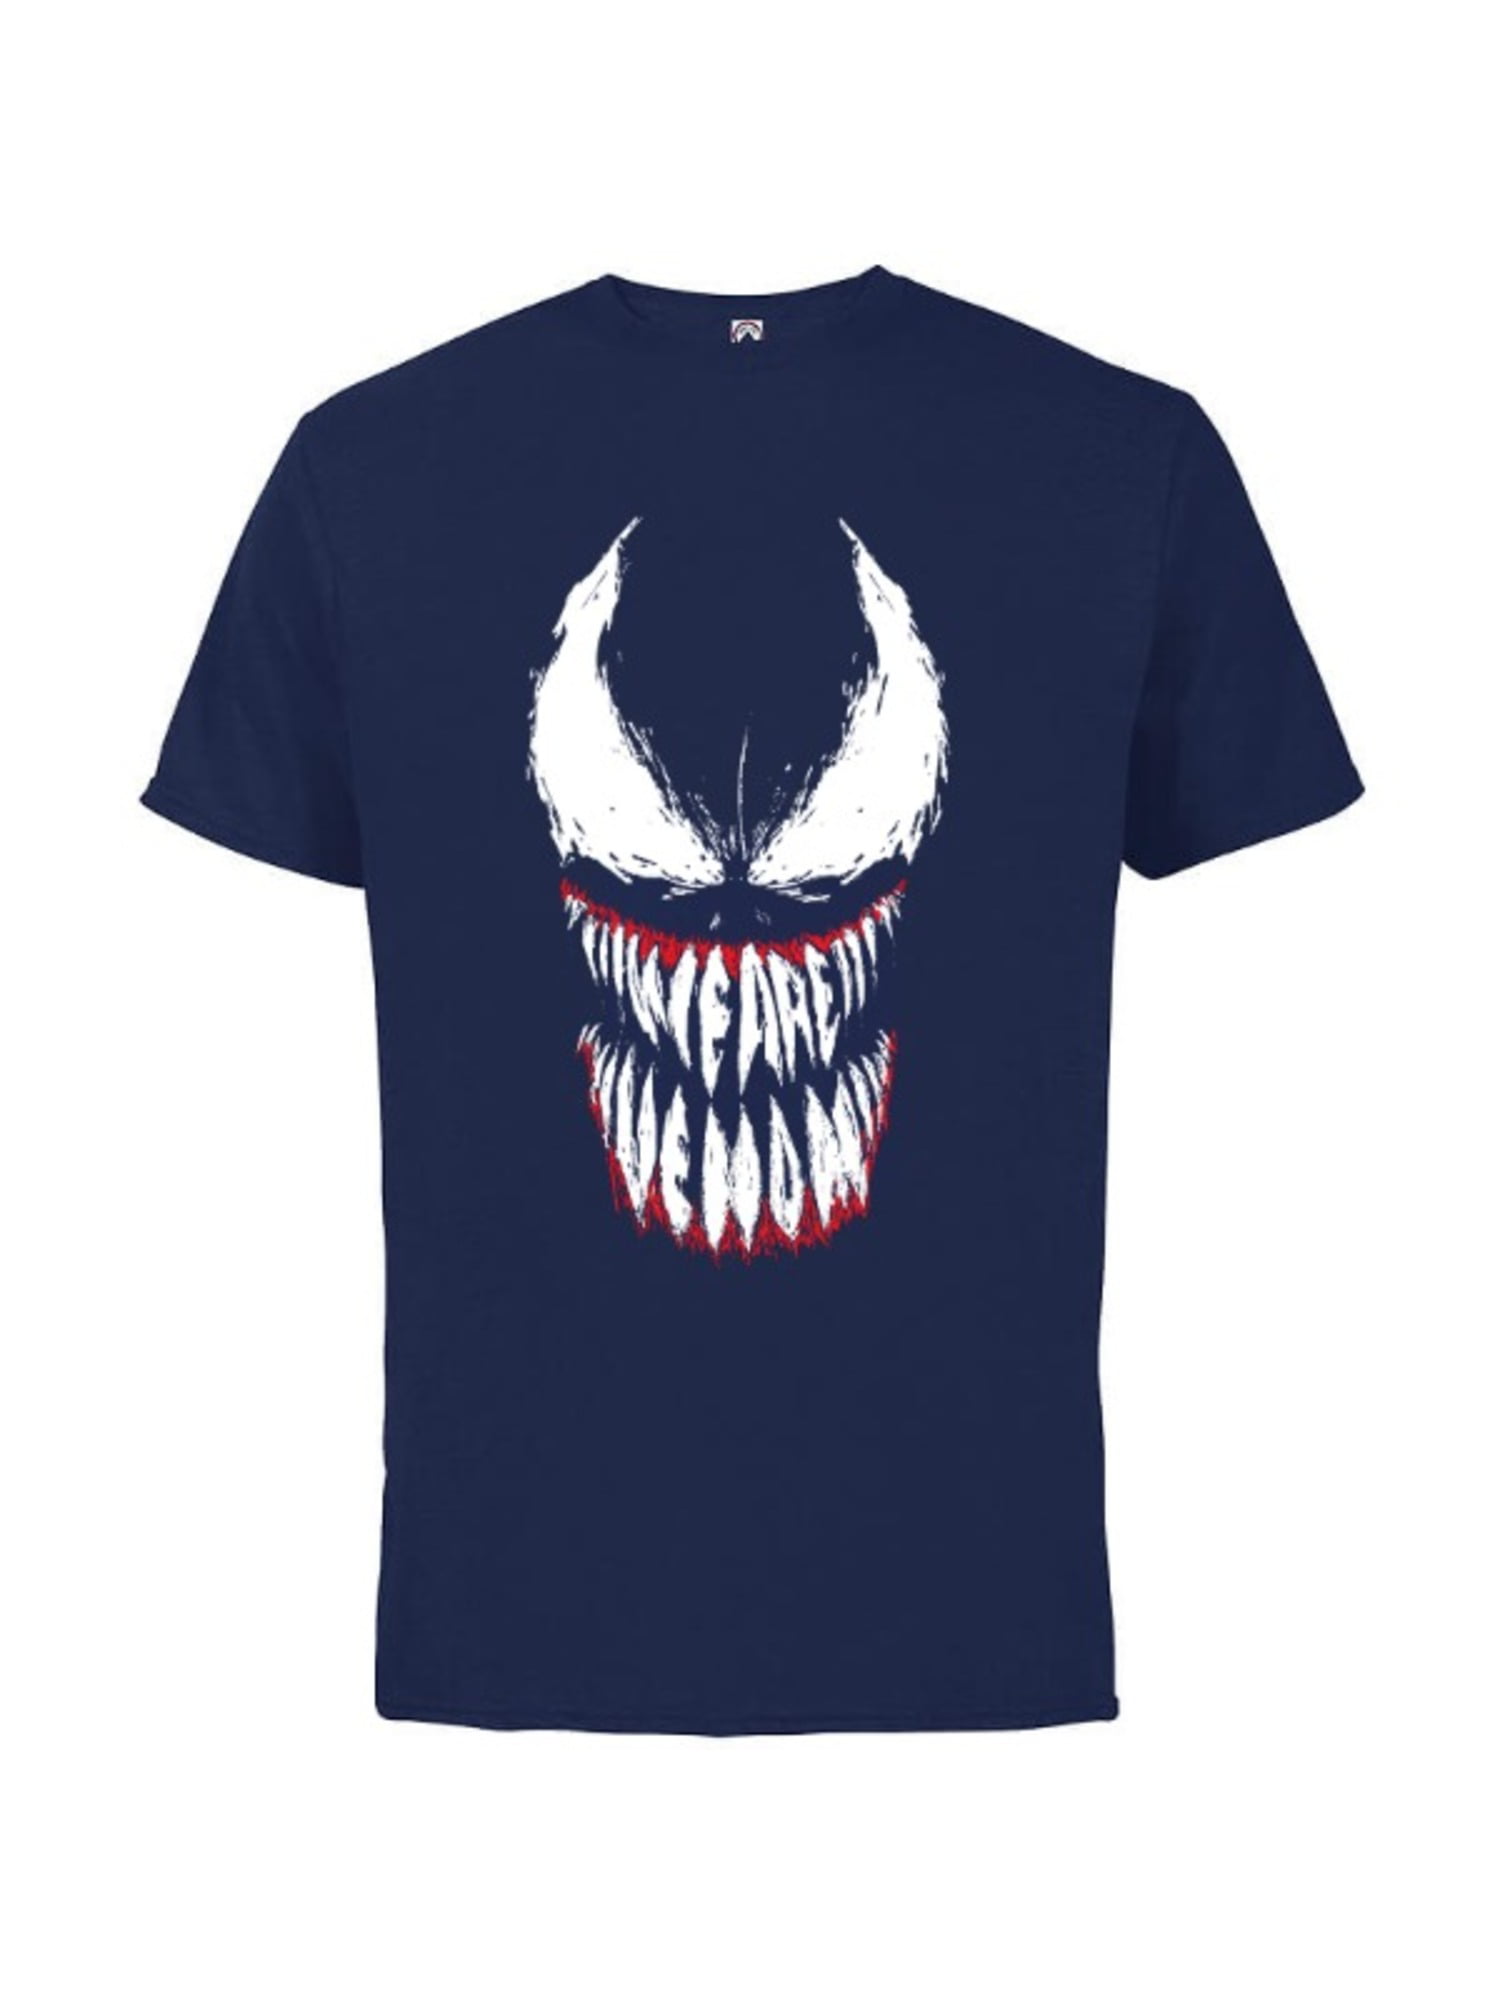 Men's T-shirt Marvel Venom Compression Villain Comic Adult Graphic T Shirts Tee 